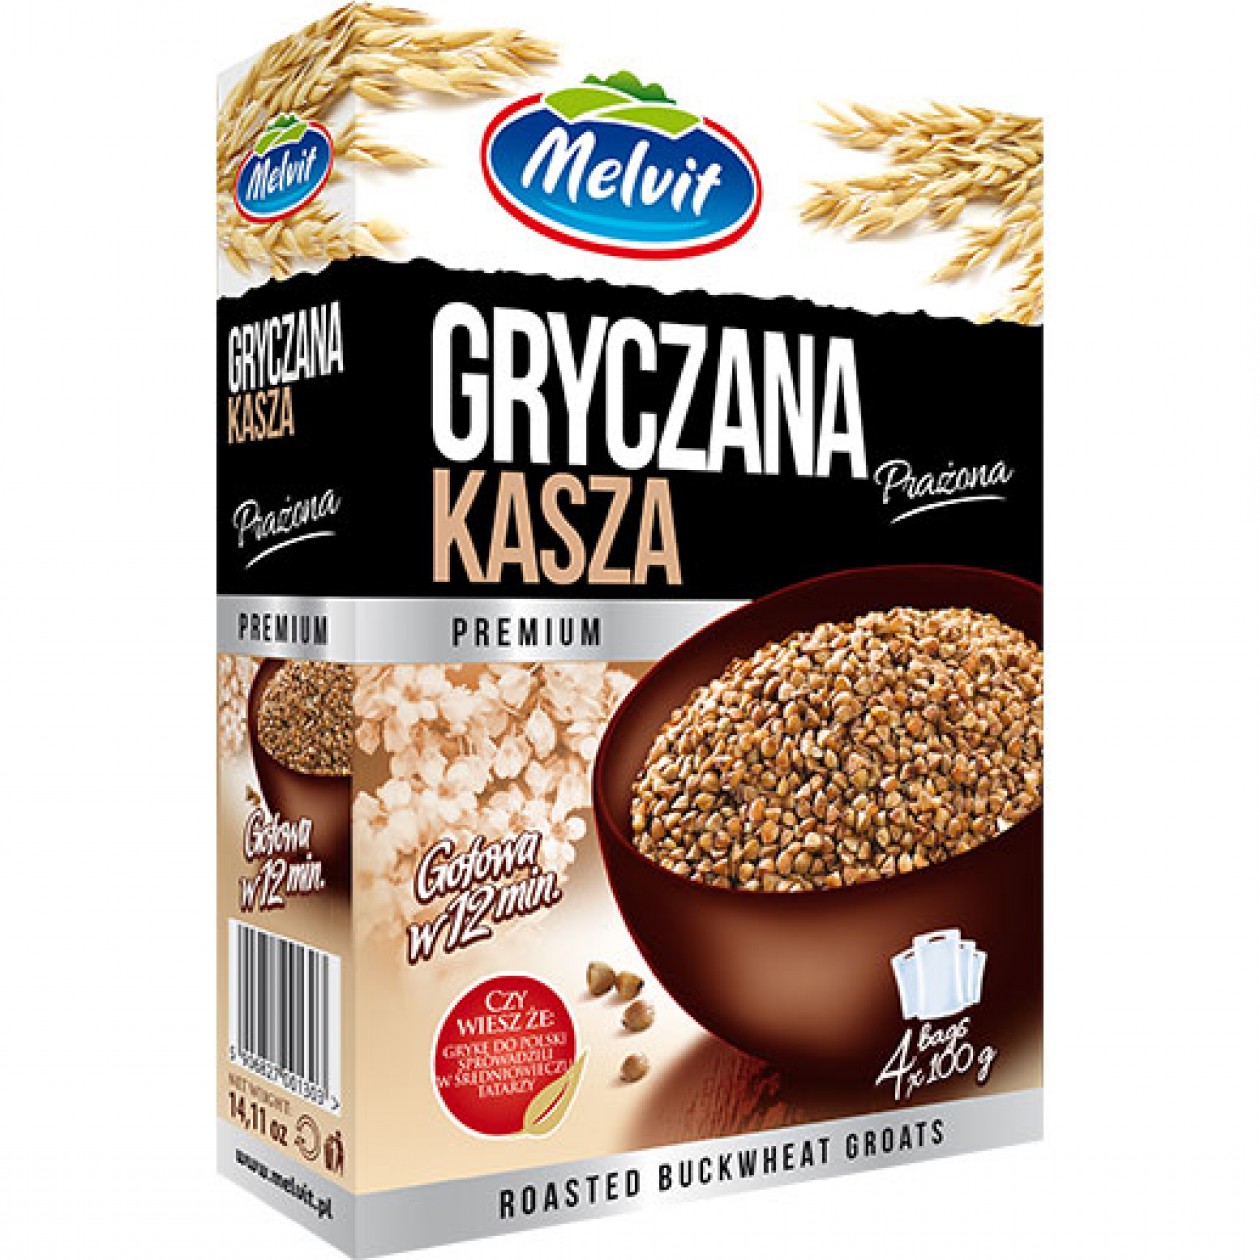 Melvit Kasza Gryezana (Roasted Buckwheat Cereal) 6x4x100g